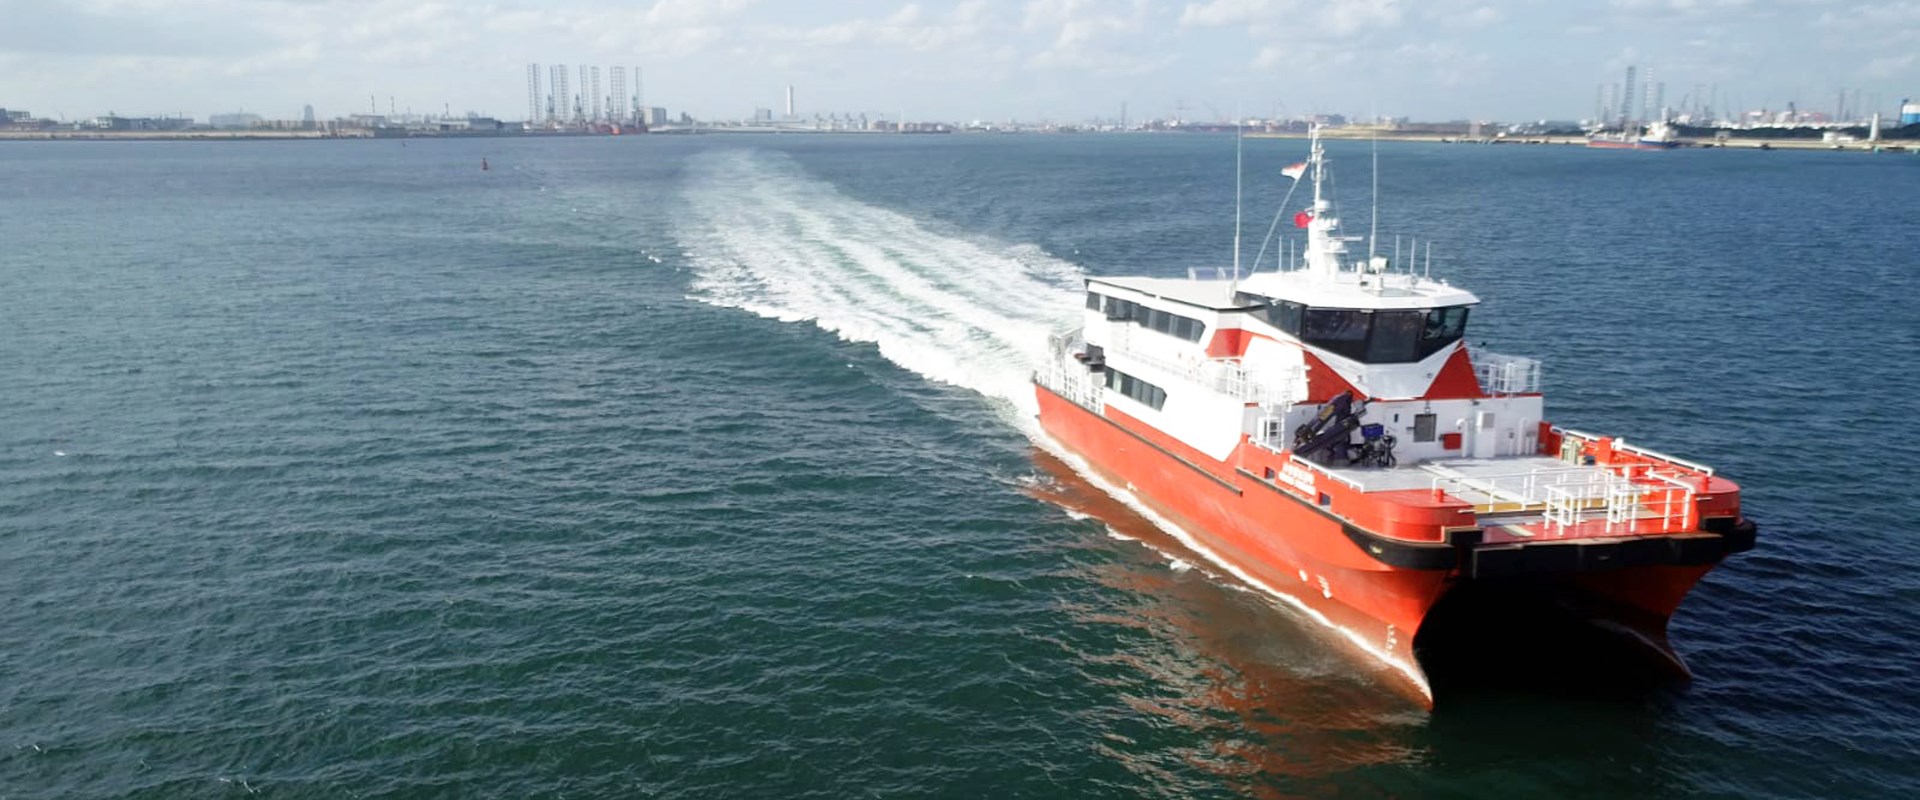 An image of a BMT designed passenger ferry